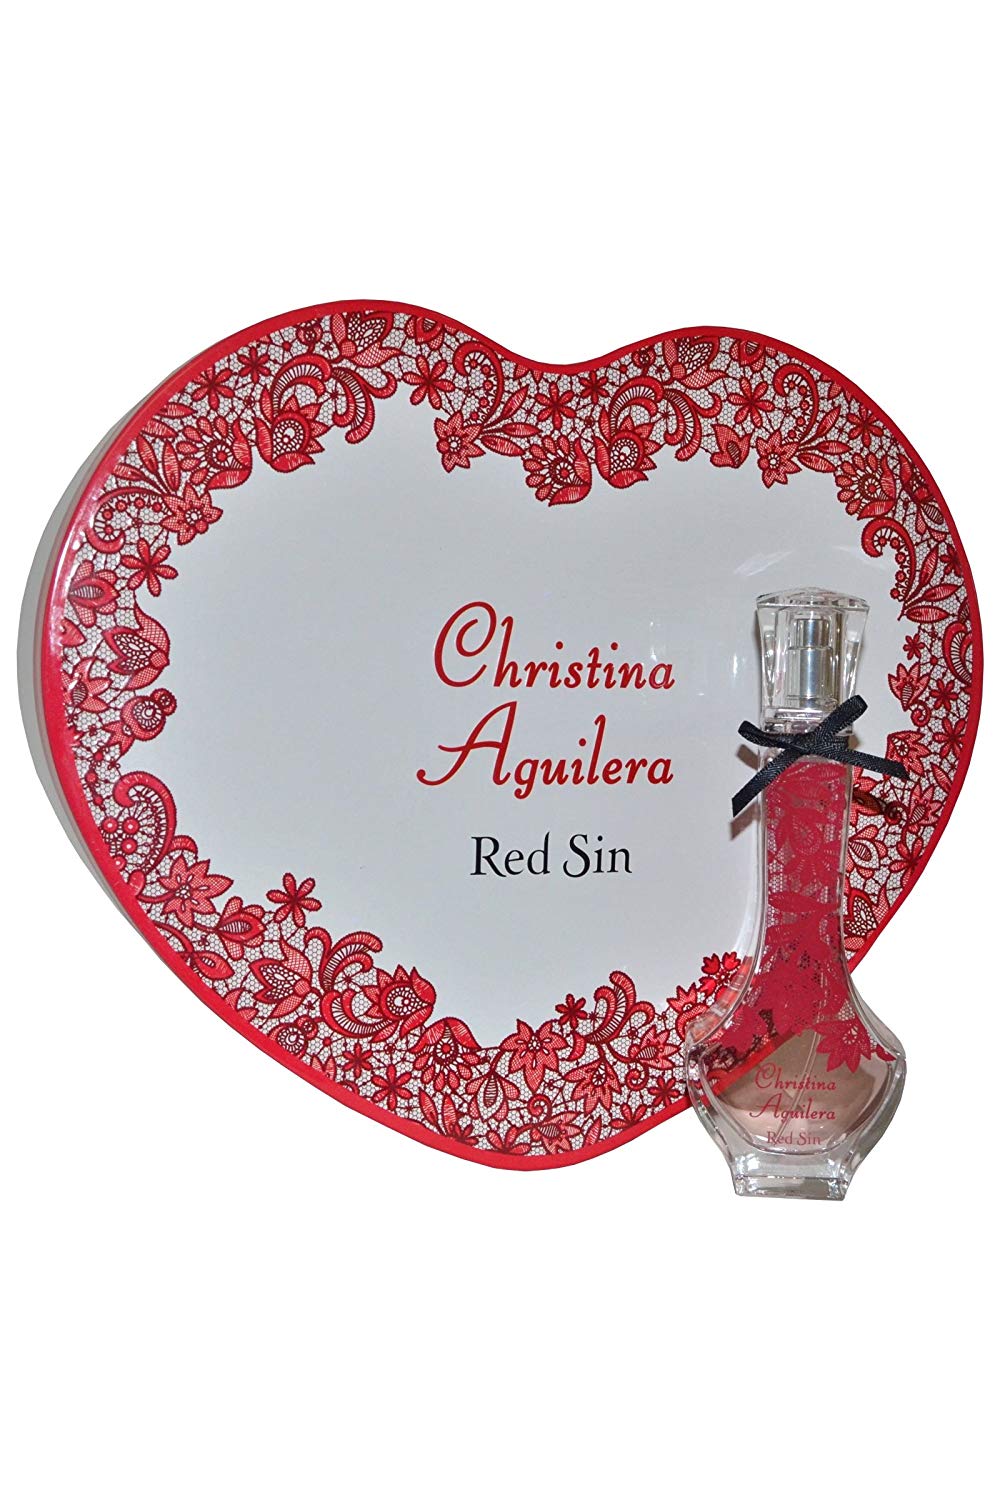 Christina Aguilera Red Sin Gift Set 30ml Eau du Parfum EDP + Tin Heart Box